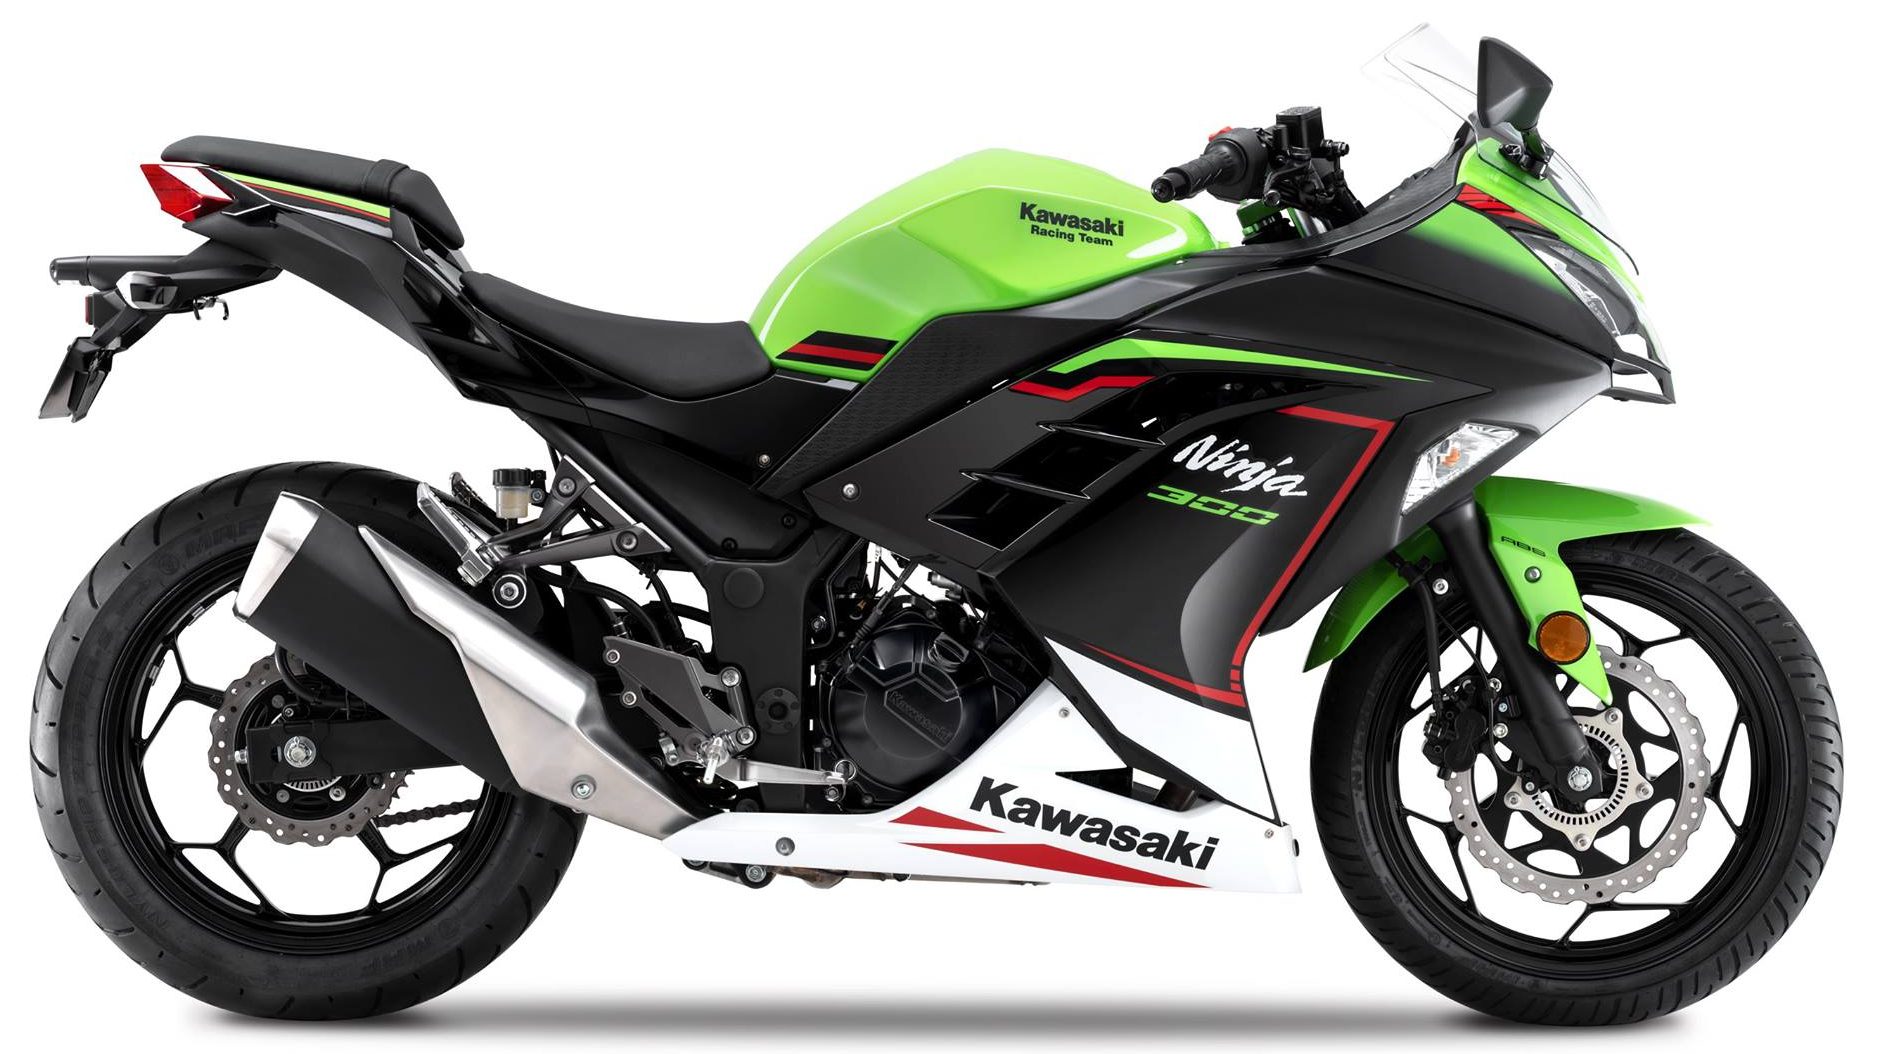 BS6 2021 Kawasaki Ninja 300 Revealed